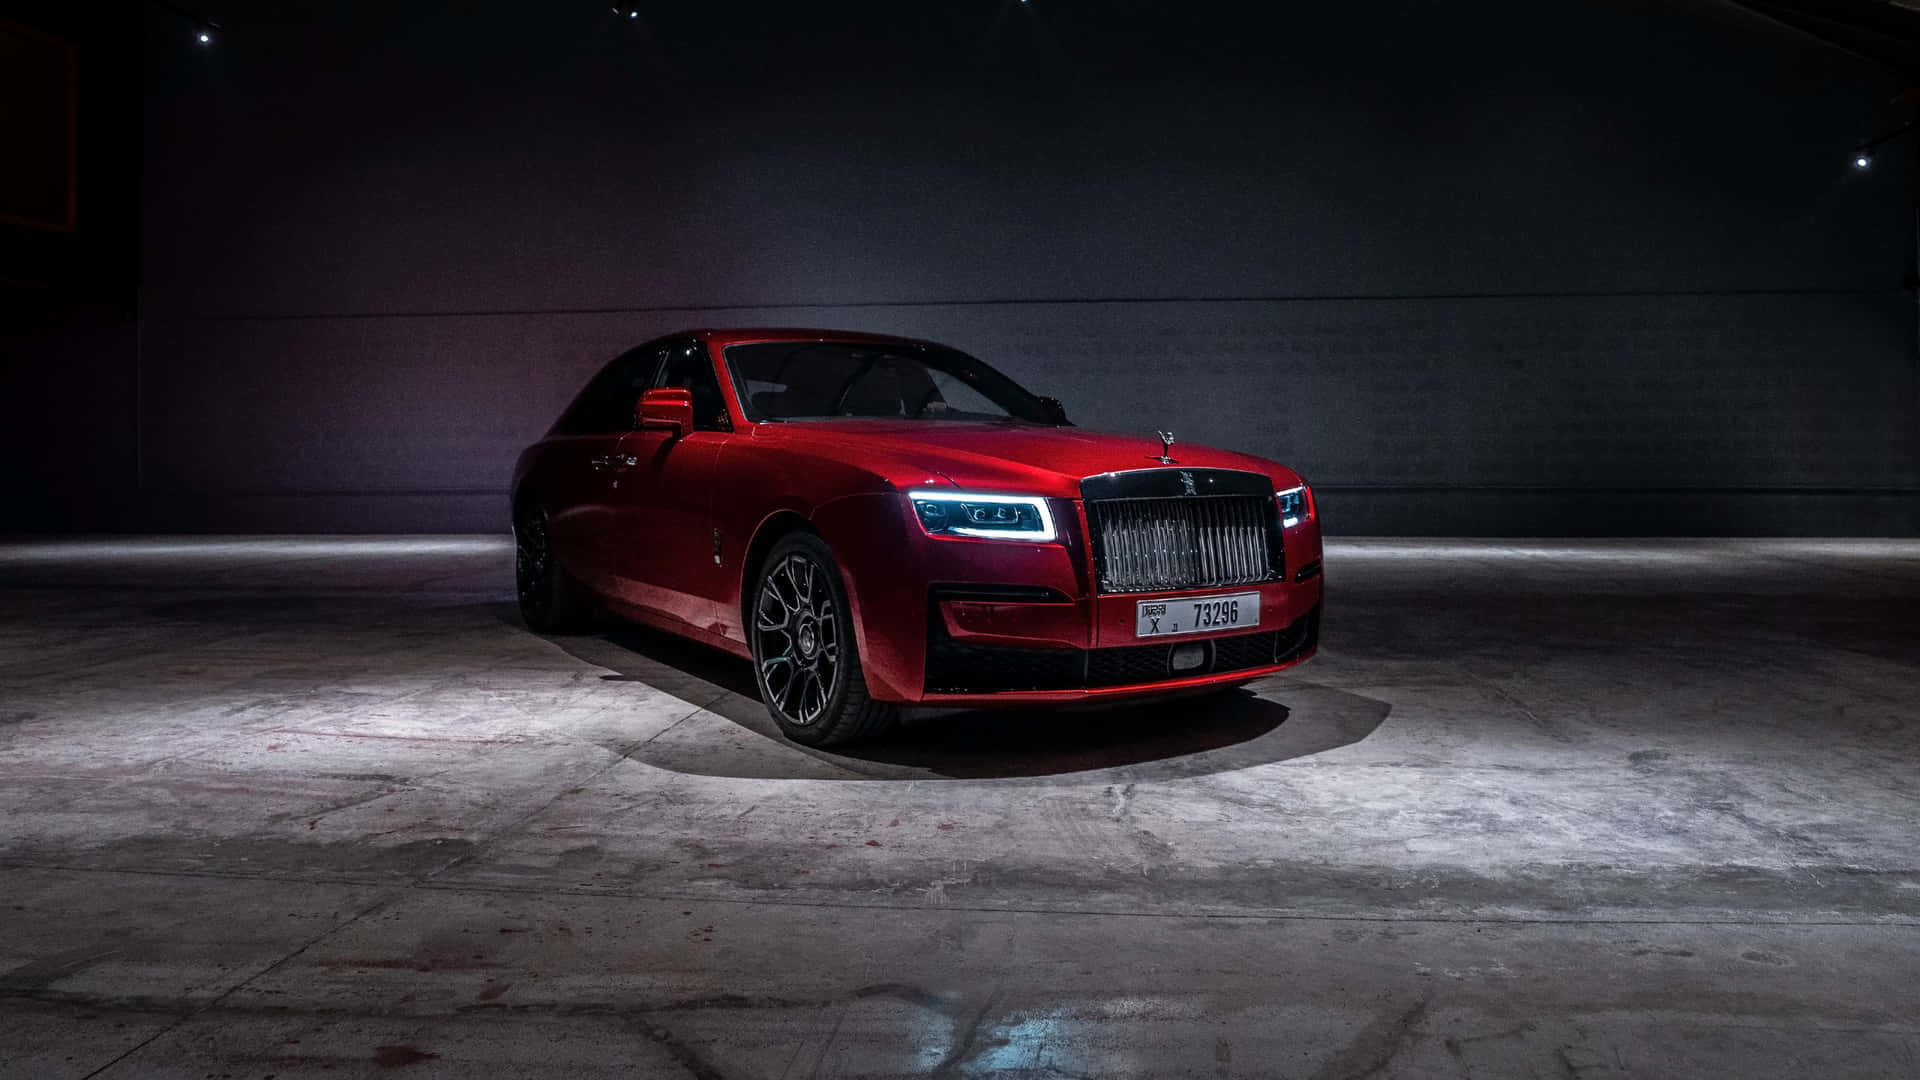 Rolls Royce Phantom - A Red Car In A Dark Room Wallpaper